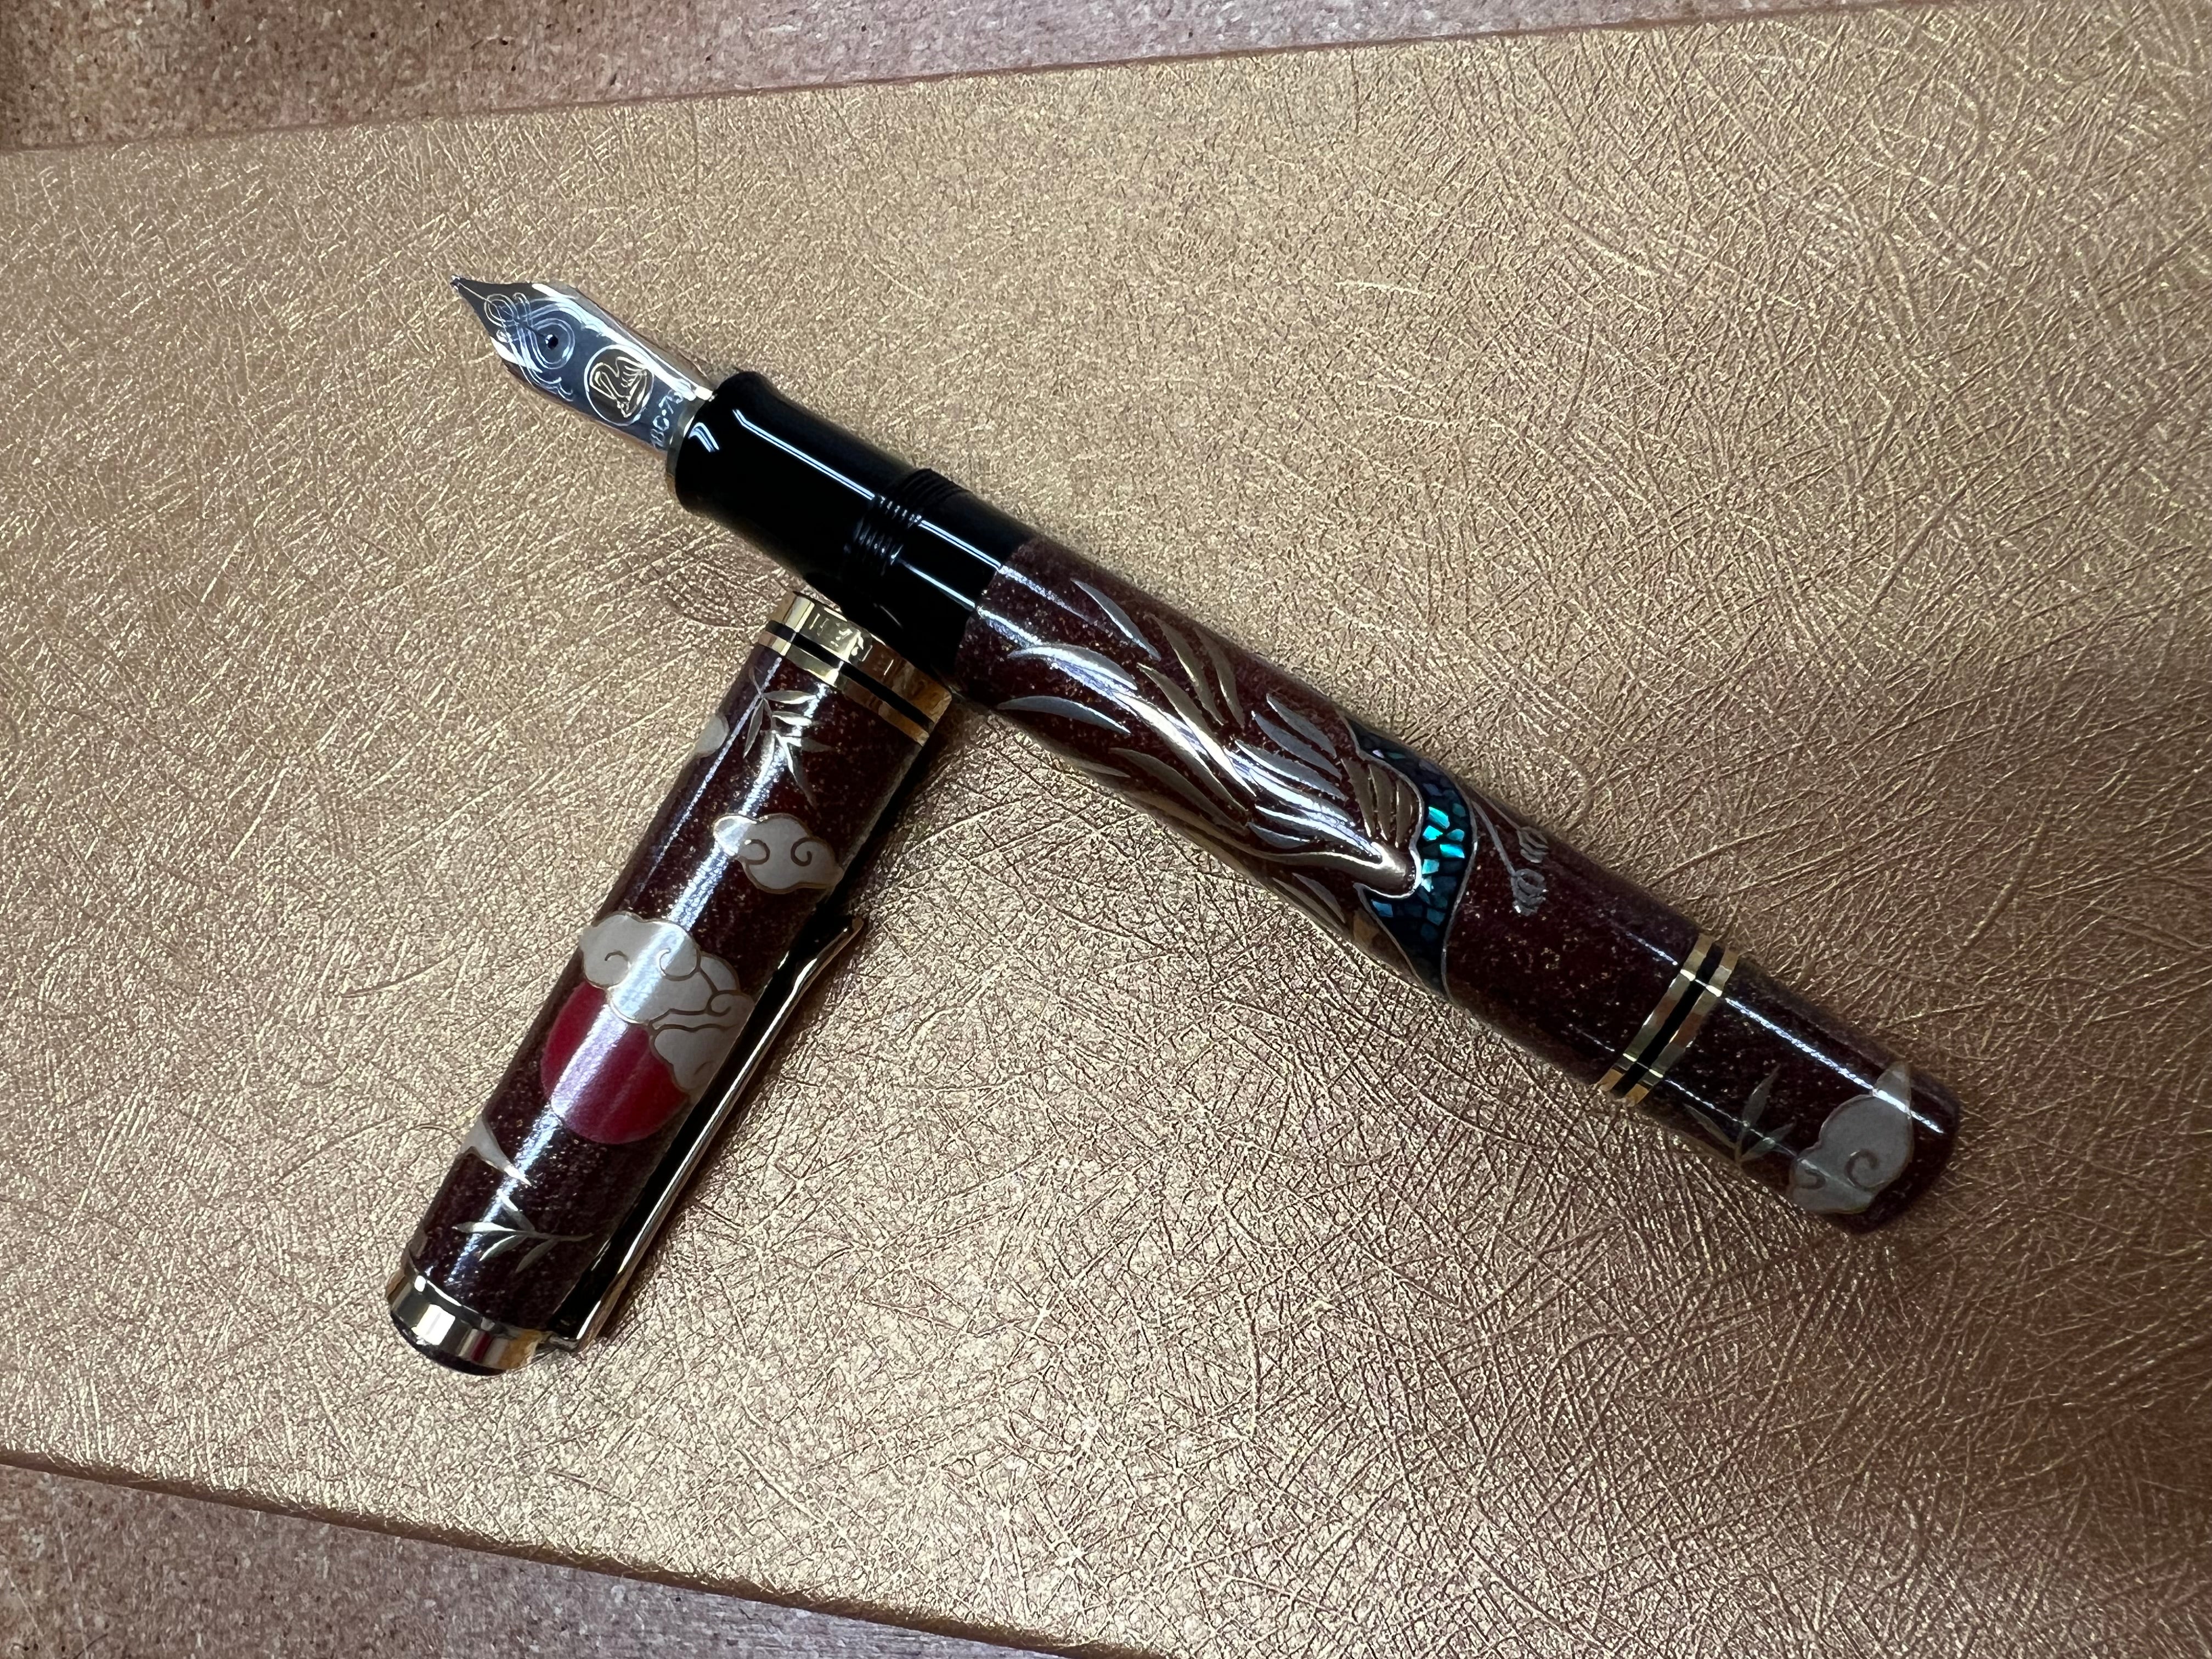 Pelikan Maki-e Fountain Pen - Limited Edition - Phoenix-Pen Boutique Ltd